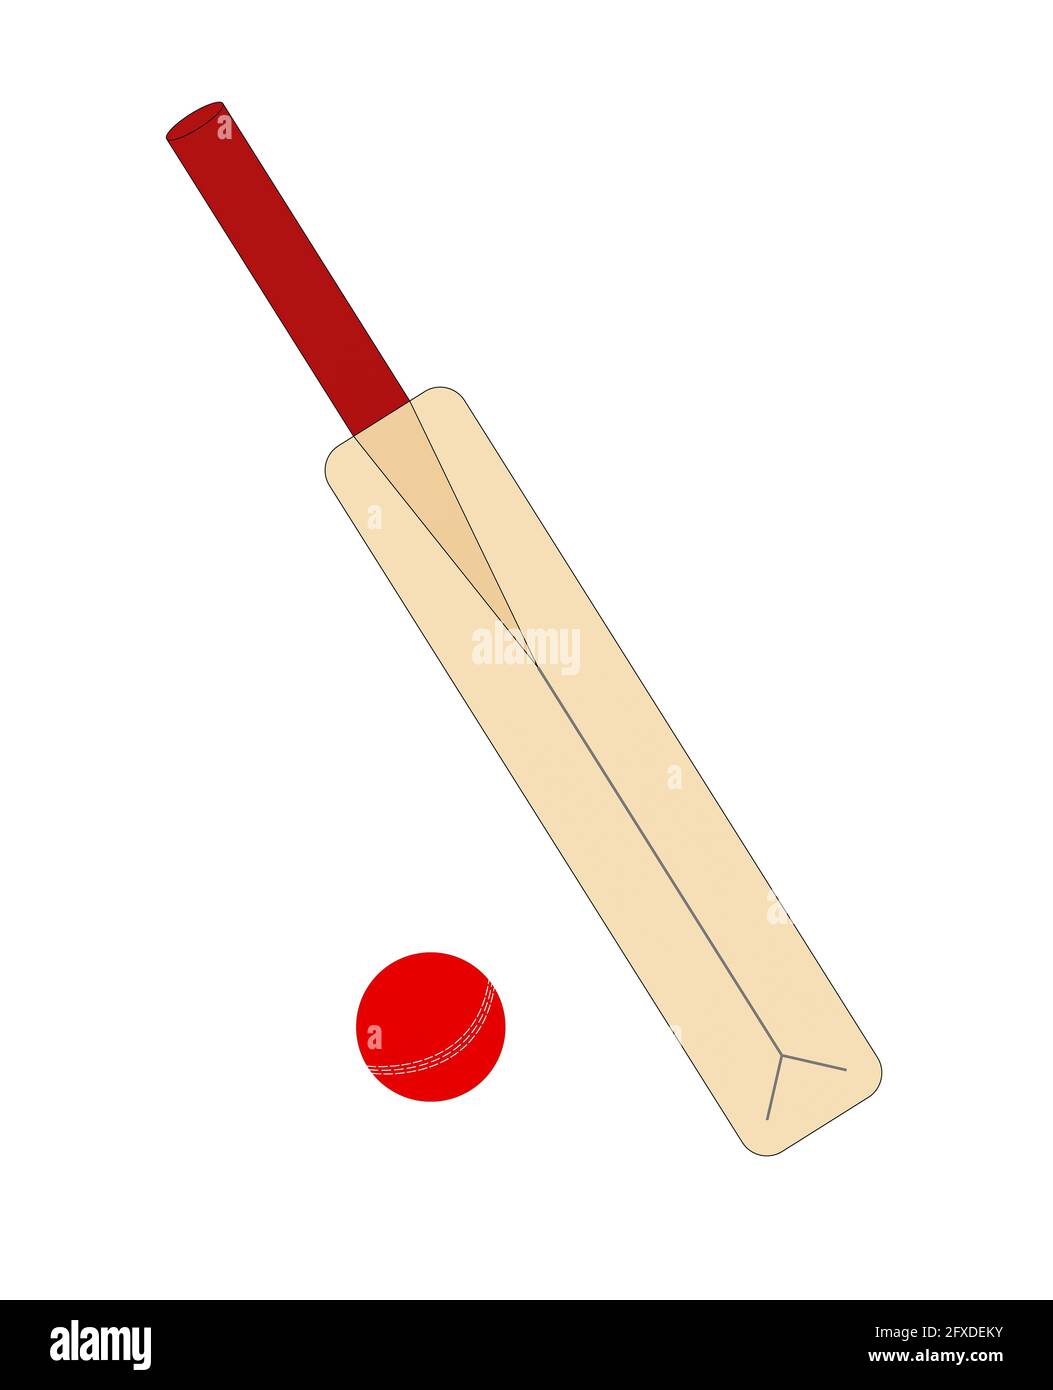 Cricket bat and ball illustration Imágenes recortadas de stock - Alamy